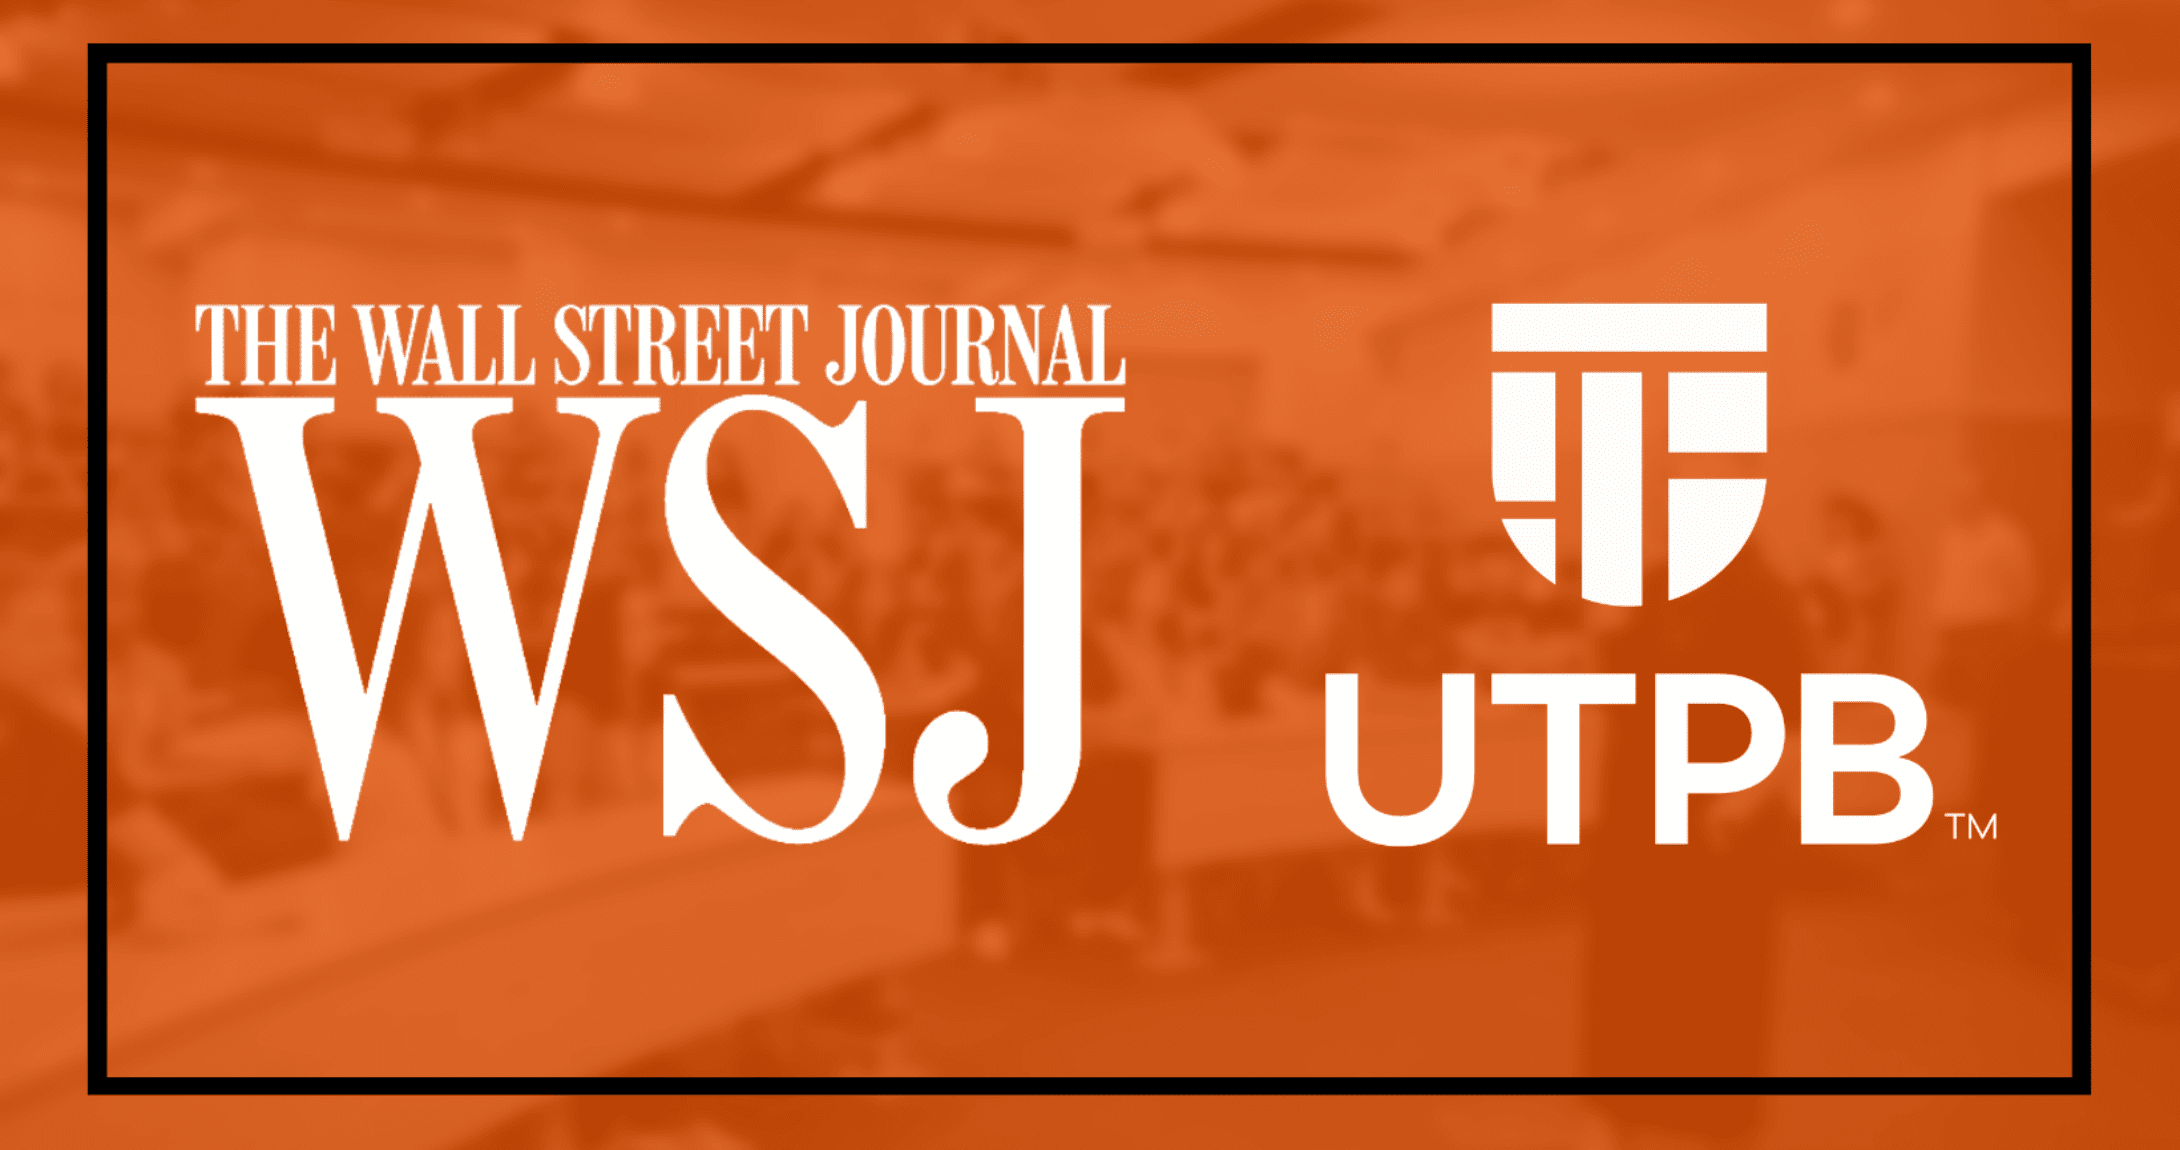 Wall Street Journal Membership Program Comes to UTPB - The